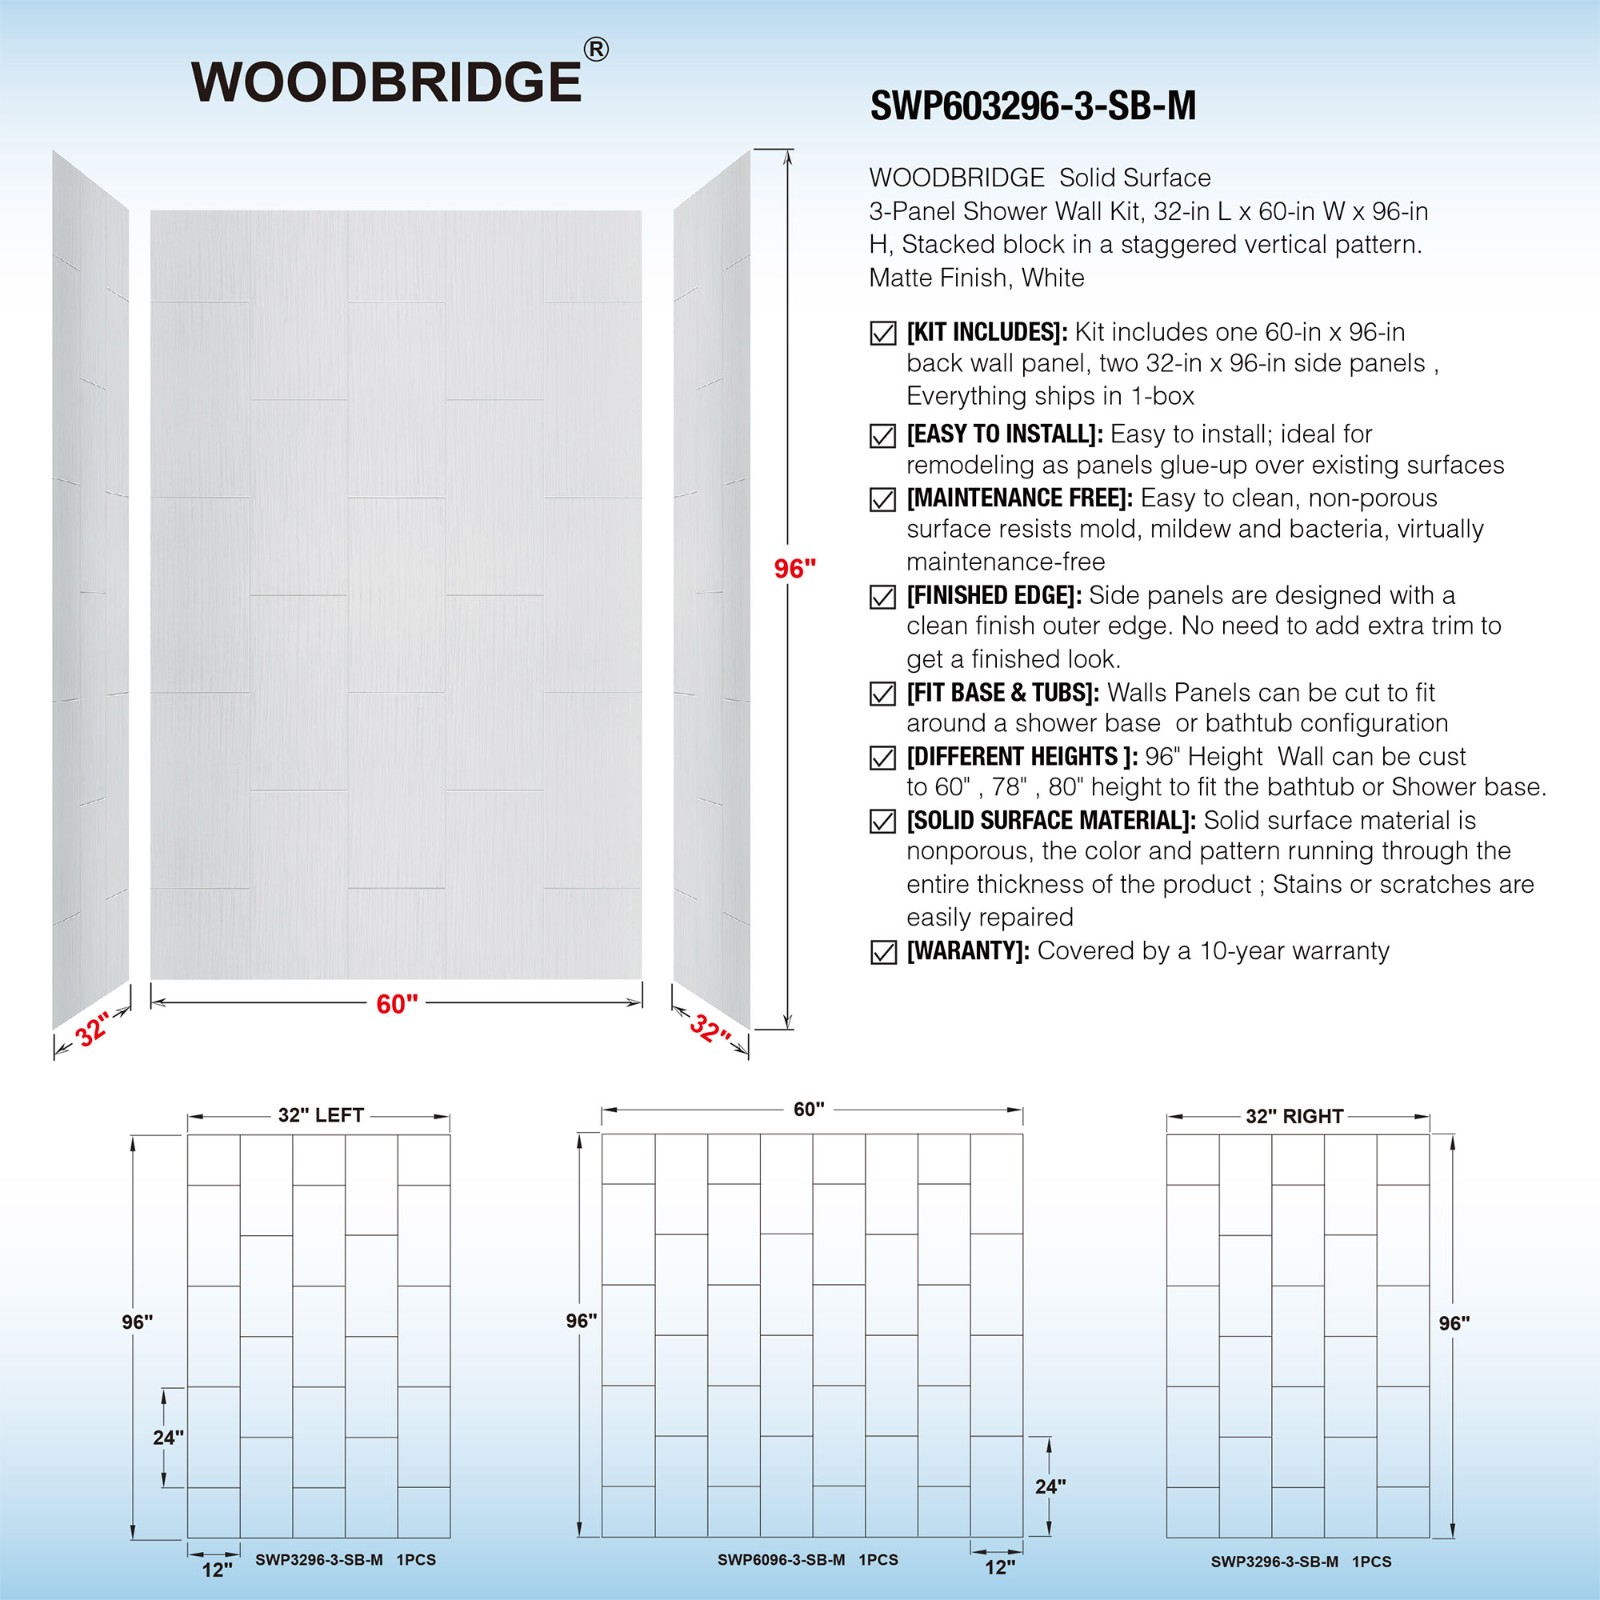  WOODBRIDGE SWP603296-3-SB-M Solid Surface 3-Panel Shower Wall Kit, 32-in L x 60-in W x 96-in H, Stacked Block in a Staggered Vertical Pattern. Matte Finish, White_8468